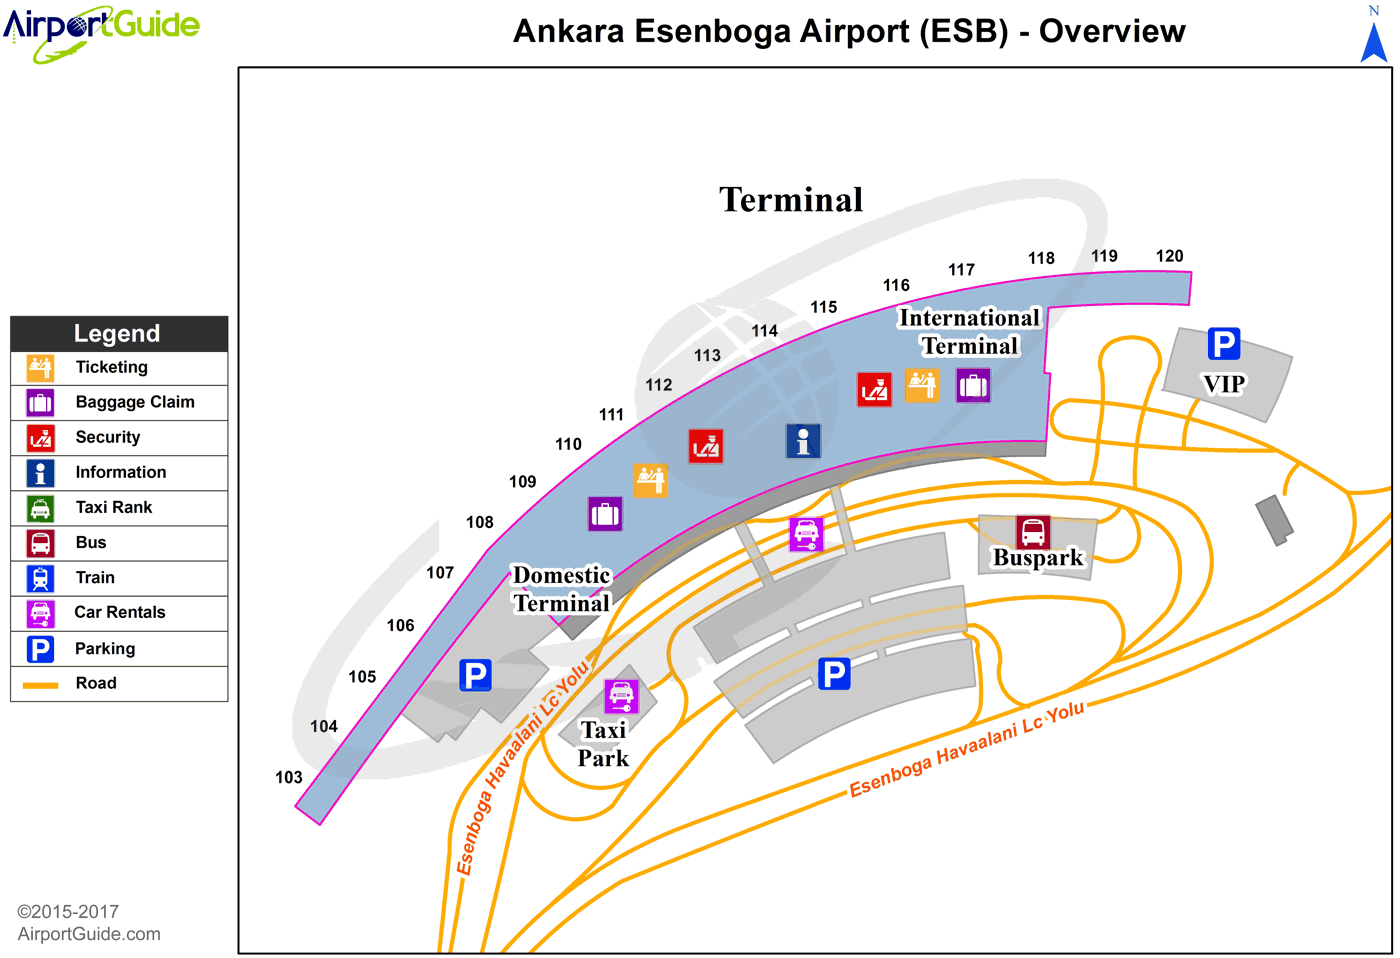 Ankara - Esenboğa International (ESB) Airport Terminal Map - Overview